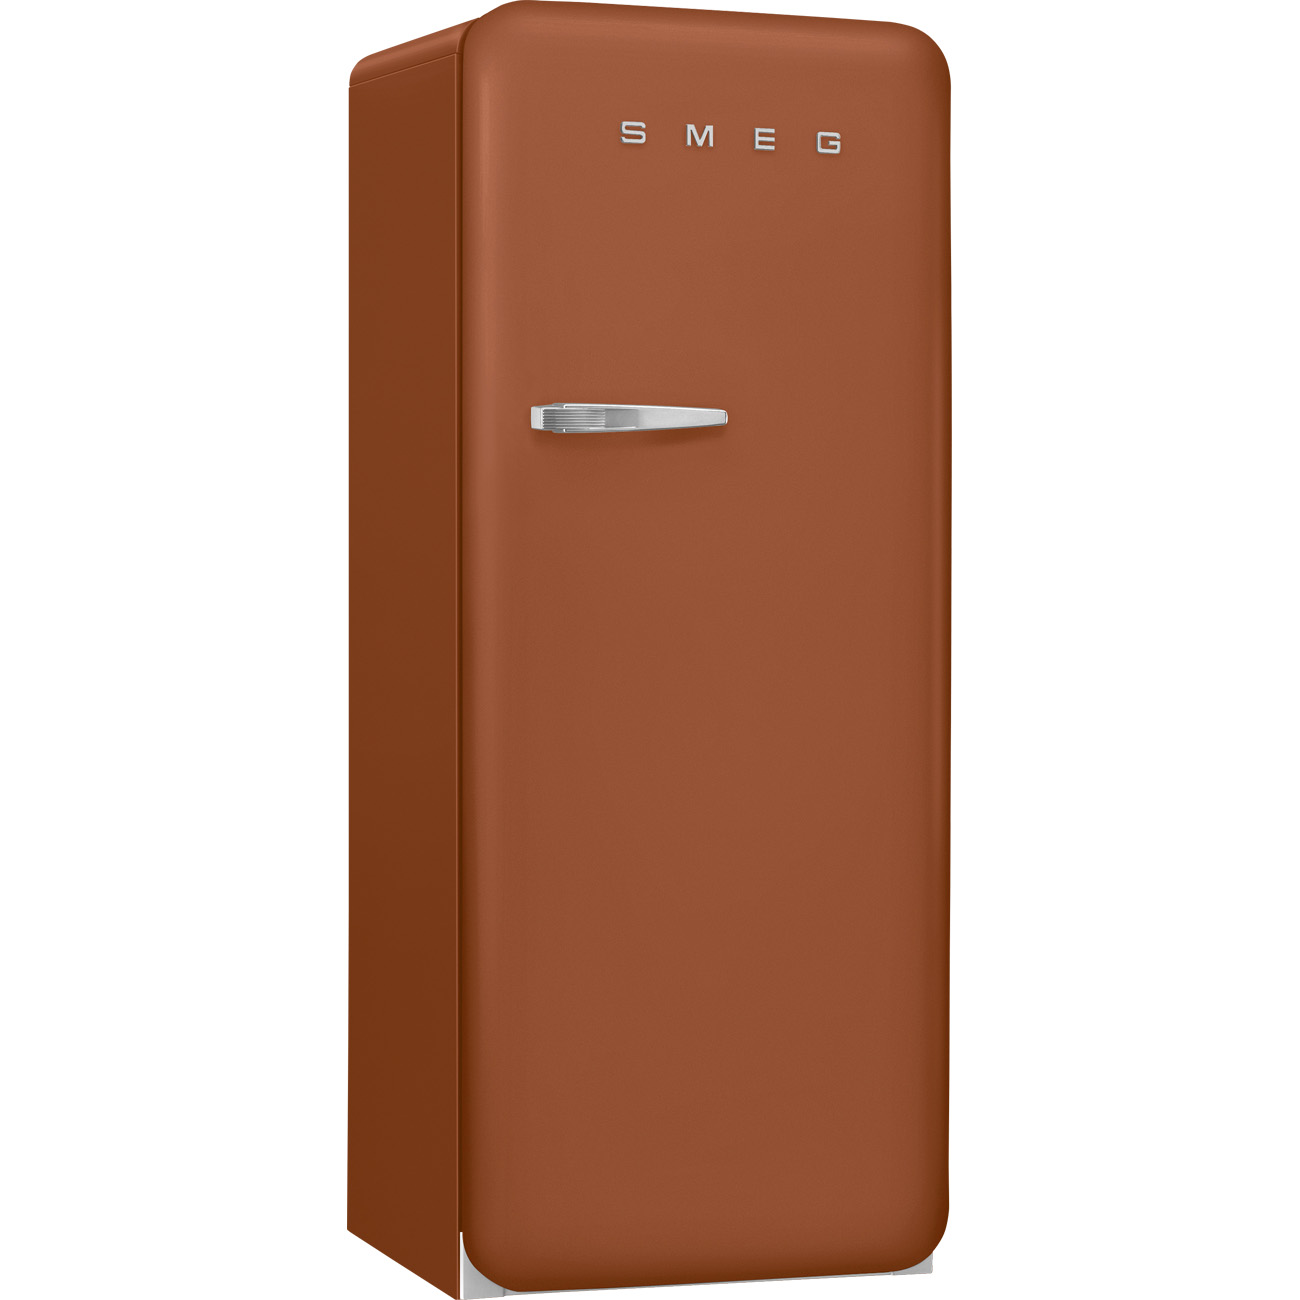 Rust refrigerator - Smeg_3